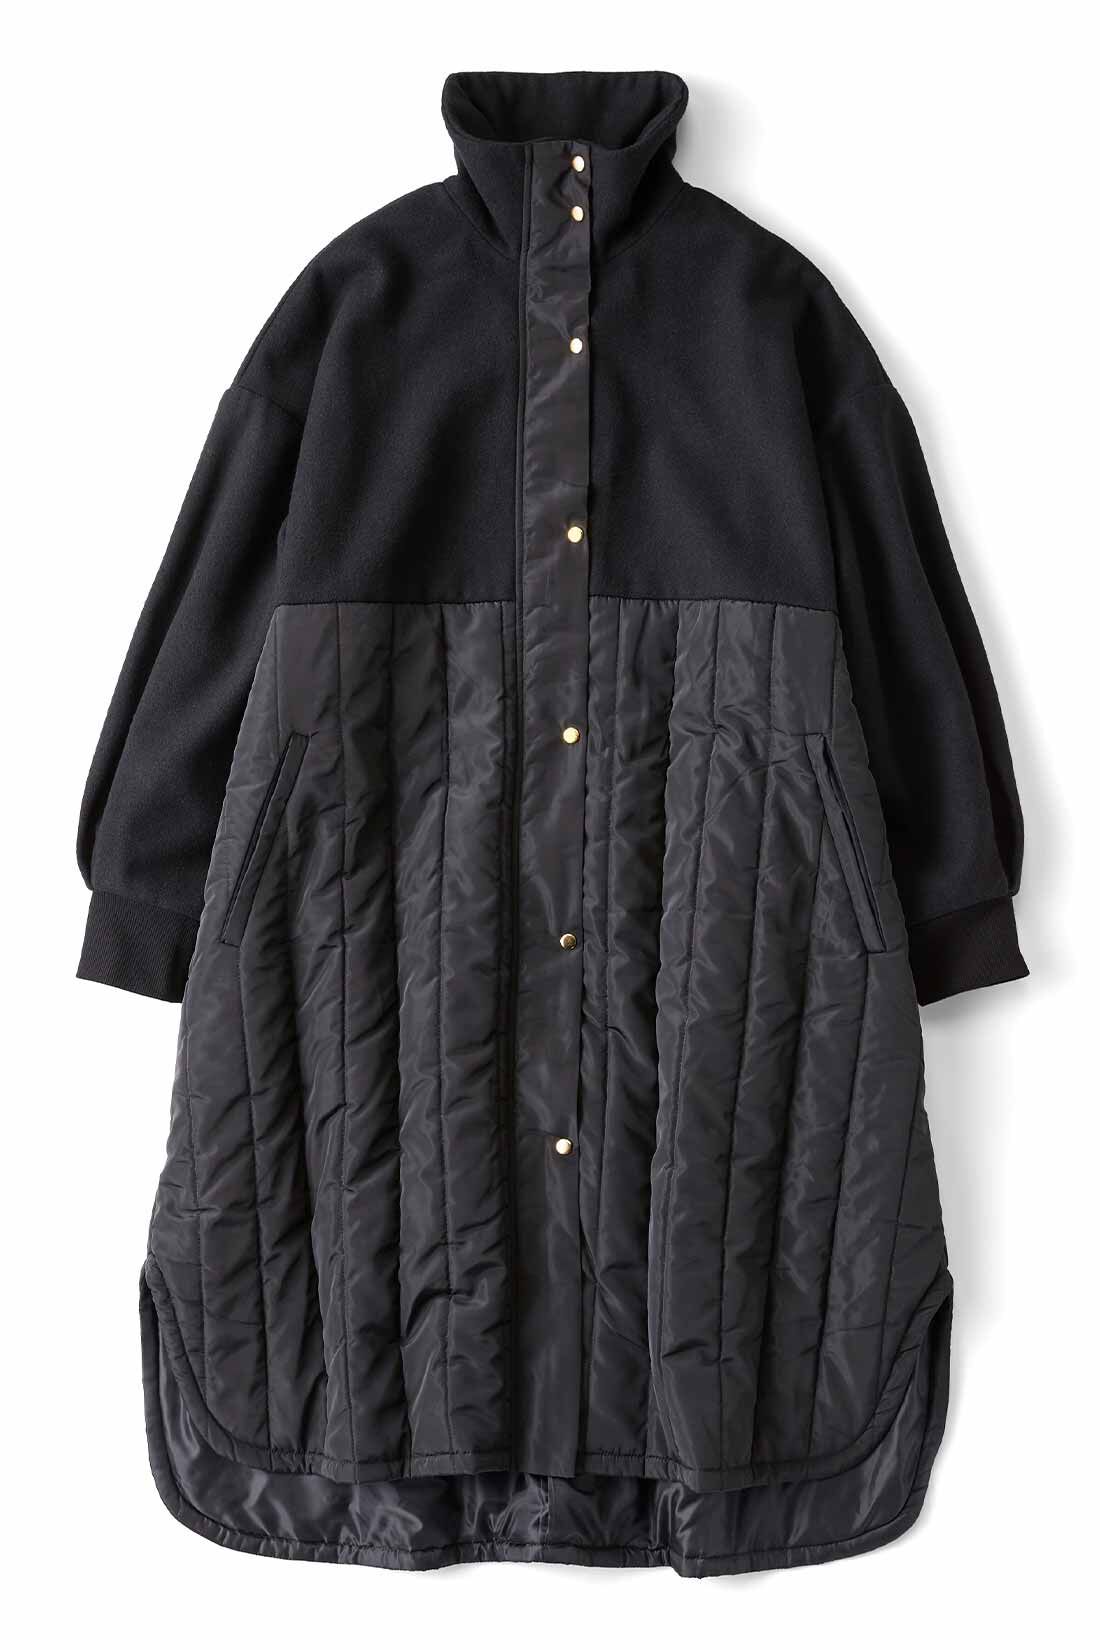 IEDIT[イディット]　ウール混メルトン遣いの上品アクティブなストライプキルティングコート|ブラック　ポケットの内側はフリース素材で、手を入れた時にも暖か。